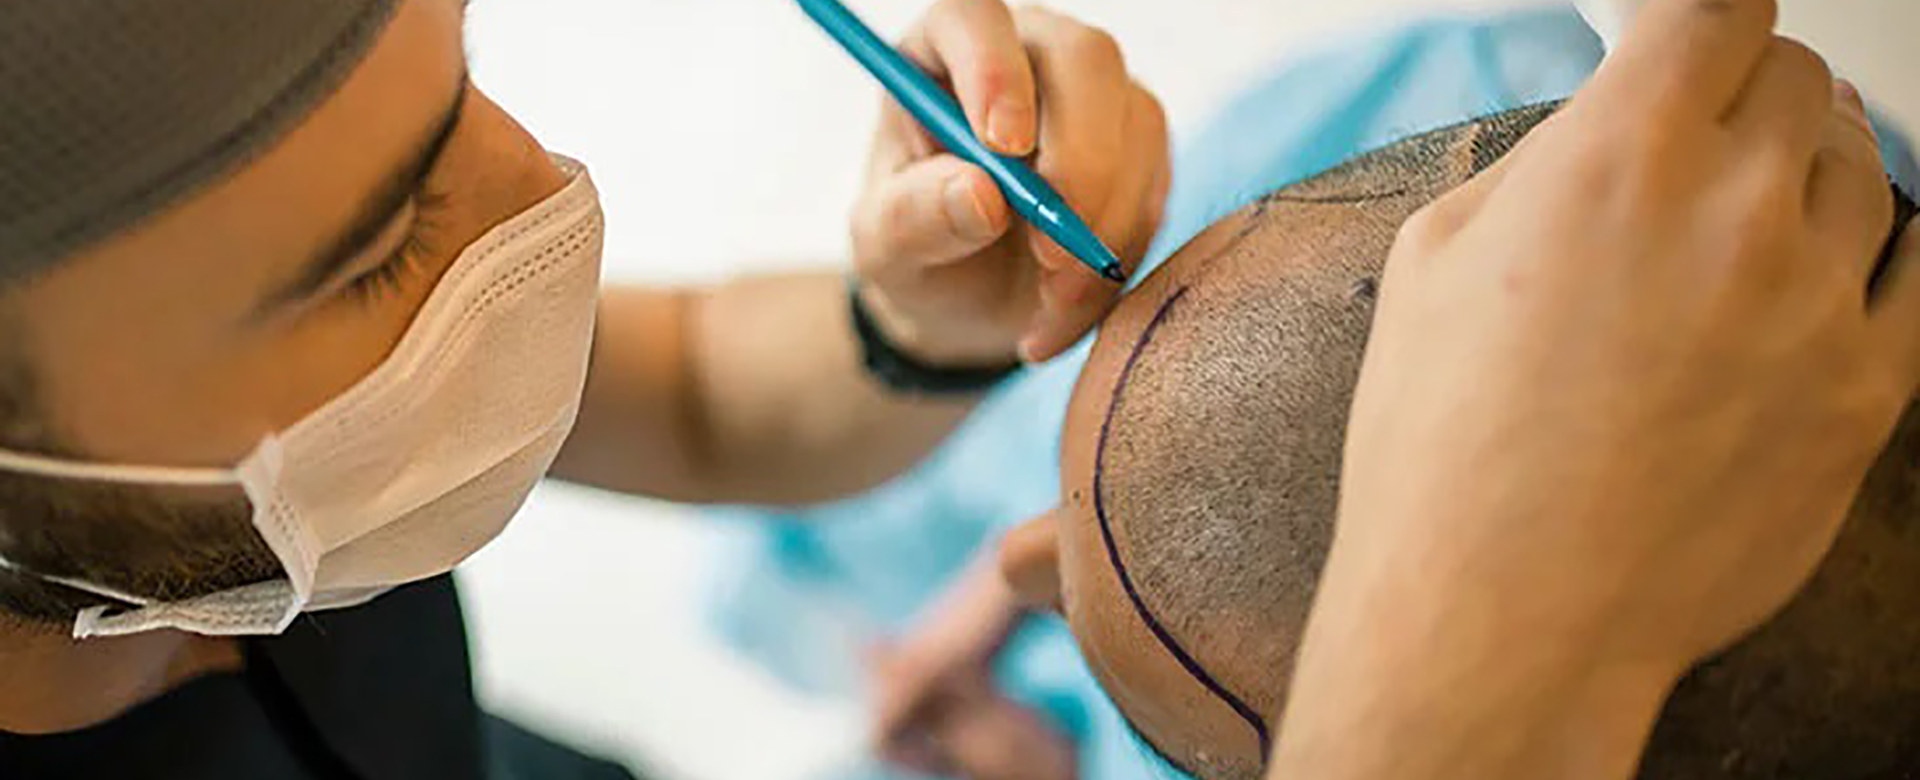 The Face Center - Hair Transplant Surgery | Hair Treatments